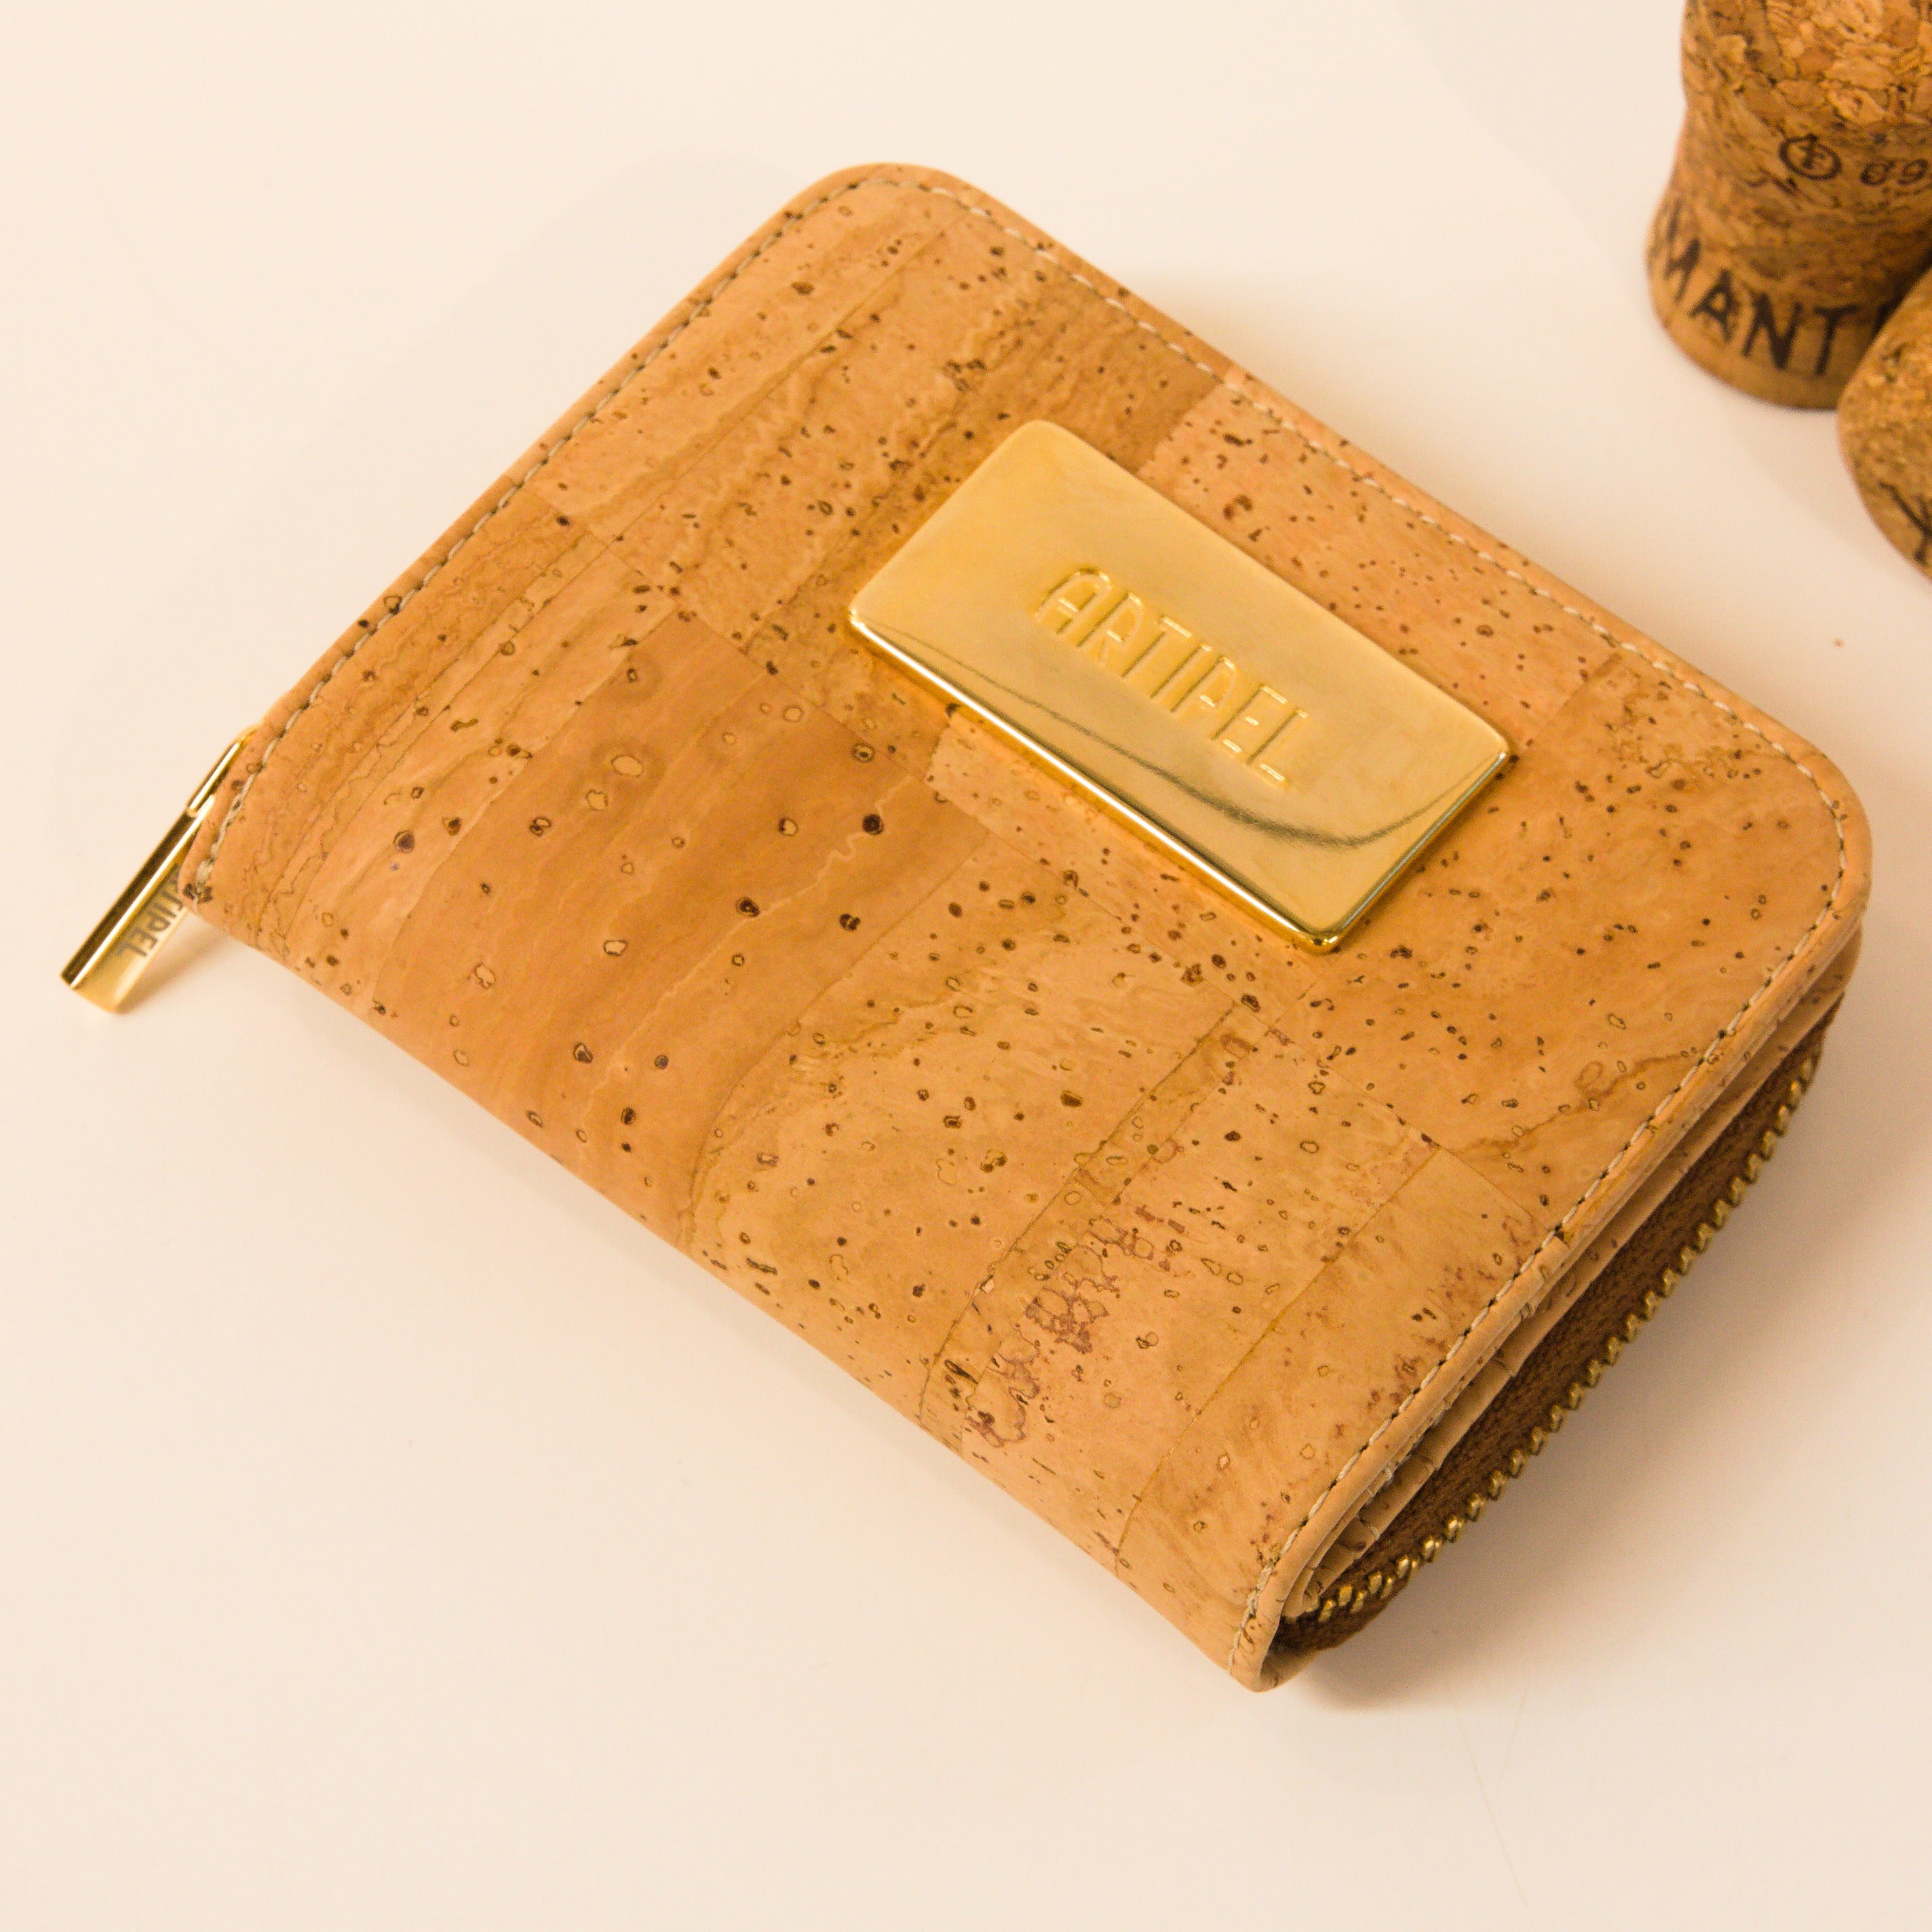 Cork women's wallet * various designs * women's wallet * handmade in Portugal * brand Artipel